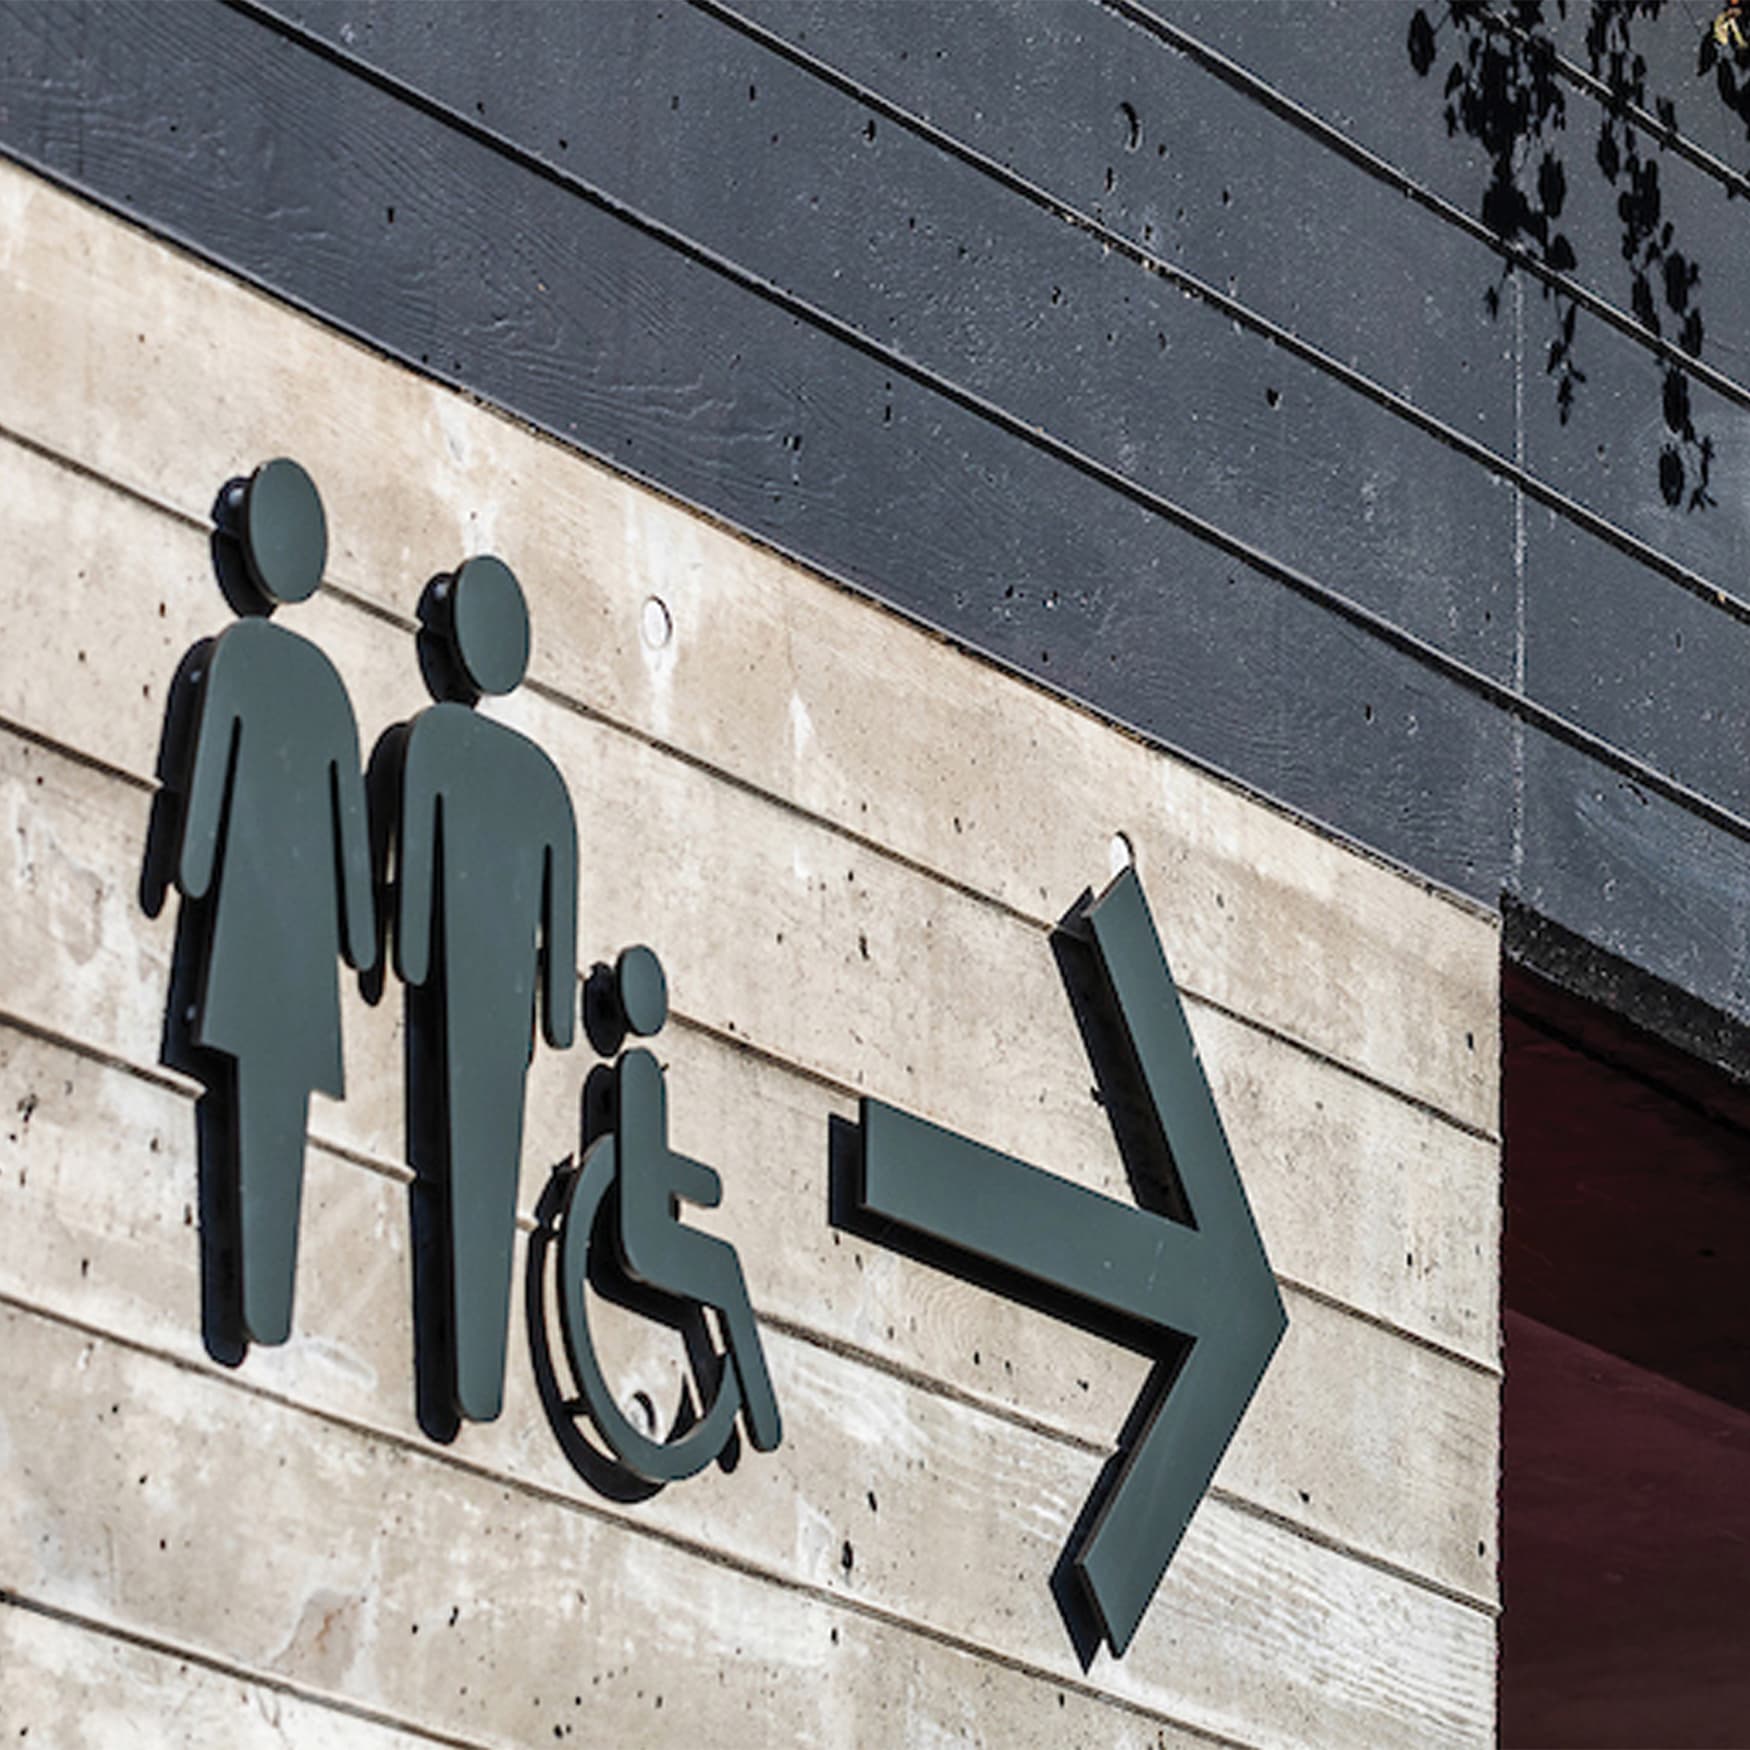 Jack London Square restroom signage directional outdoors